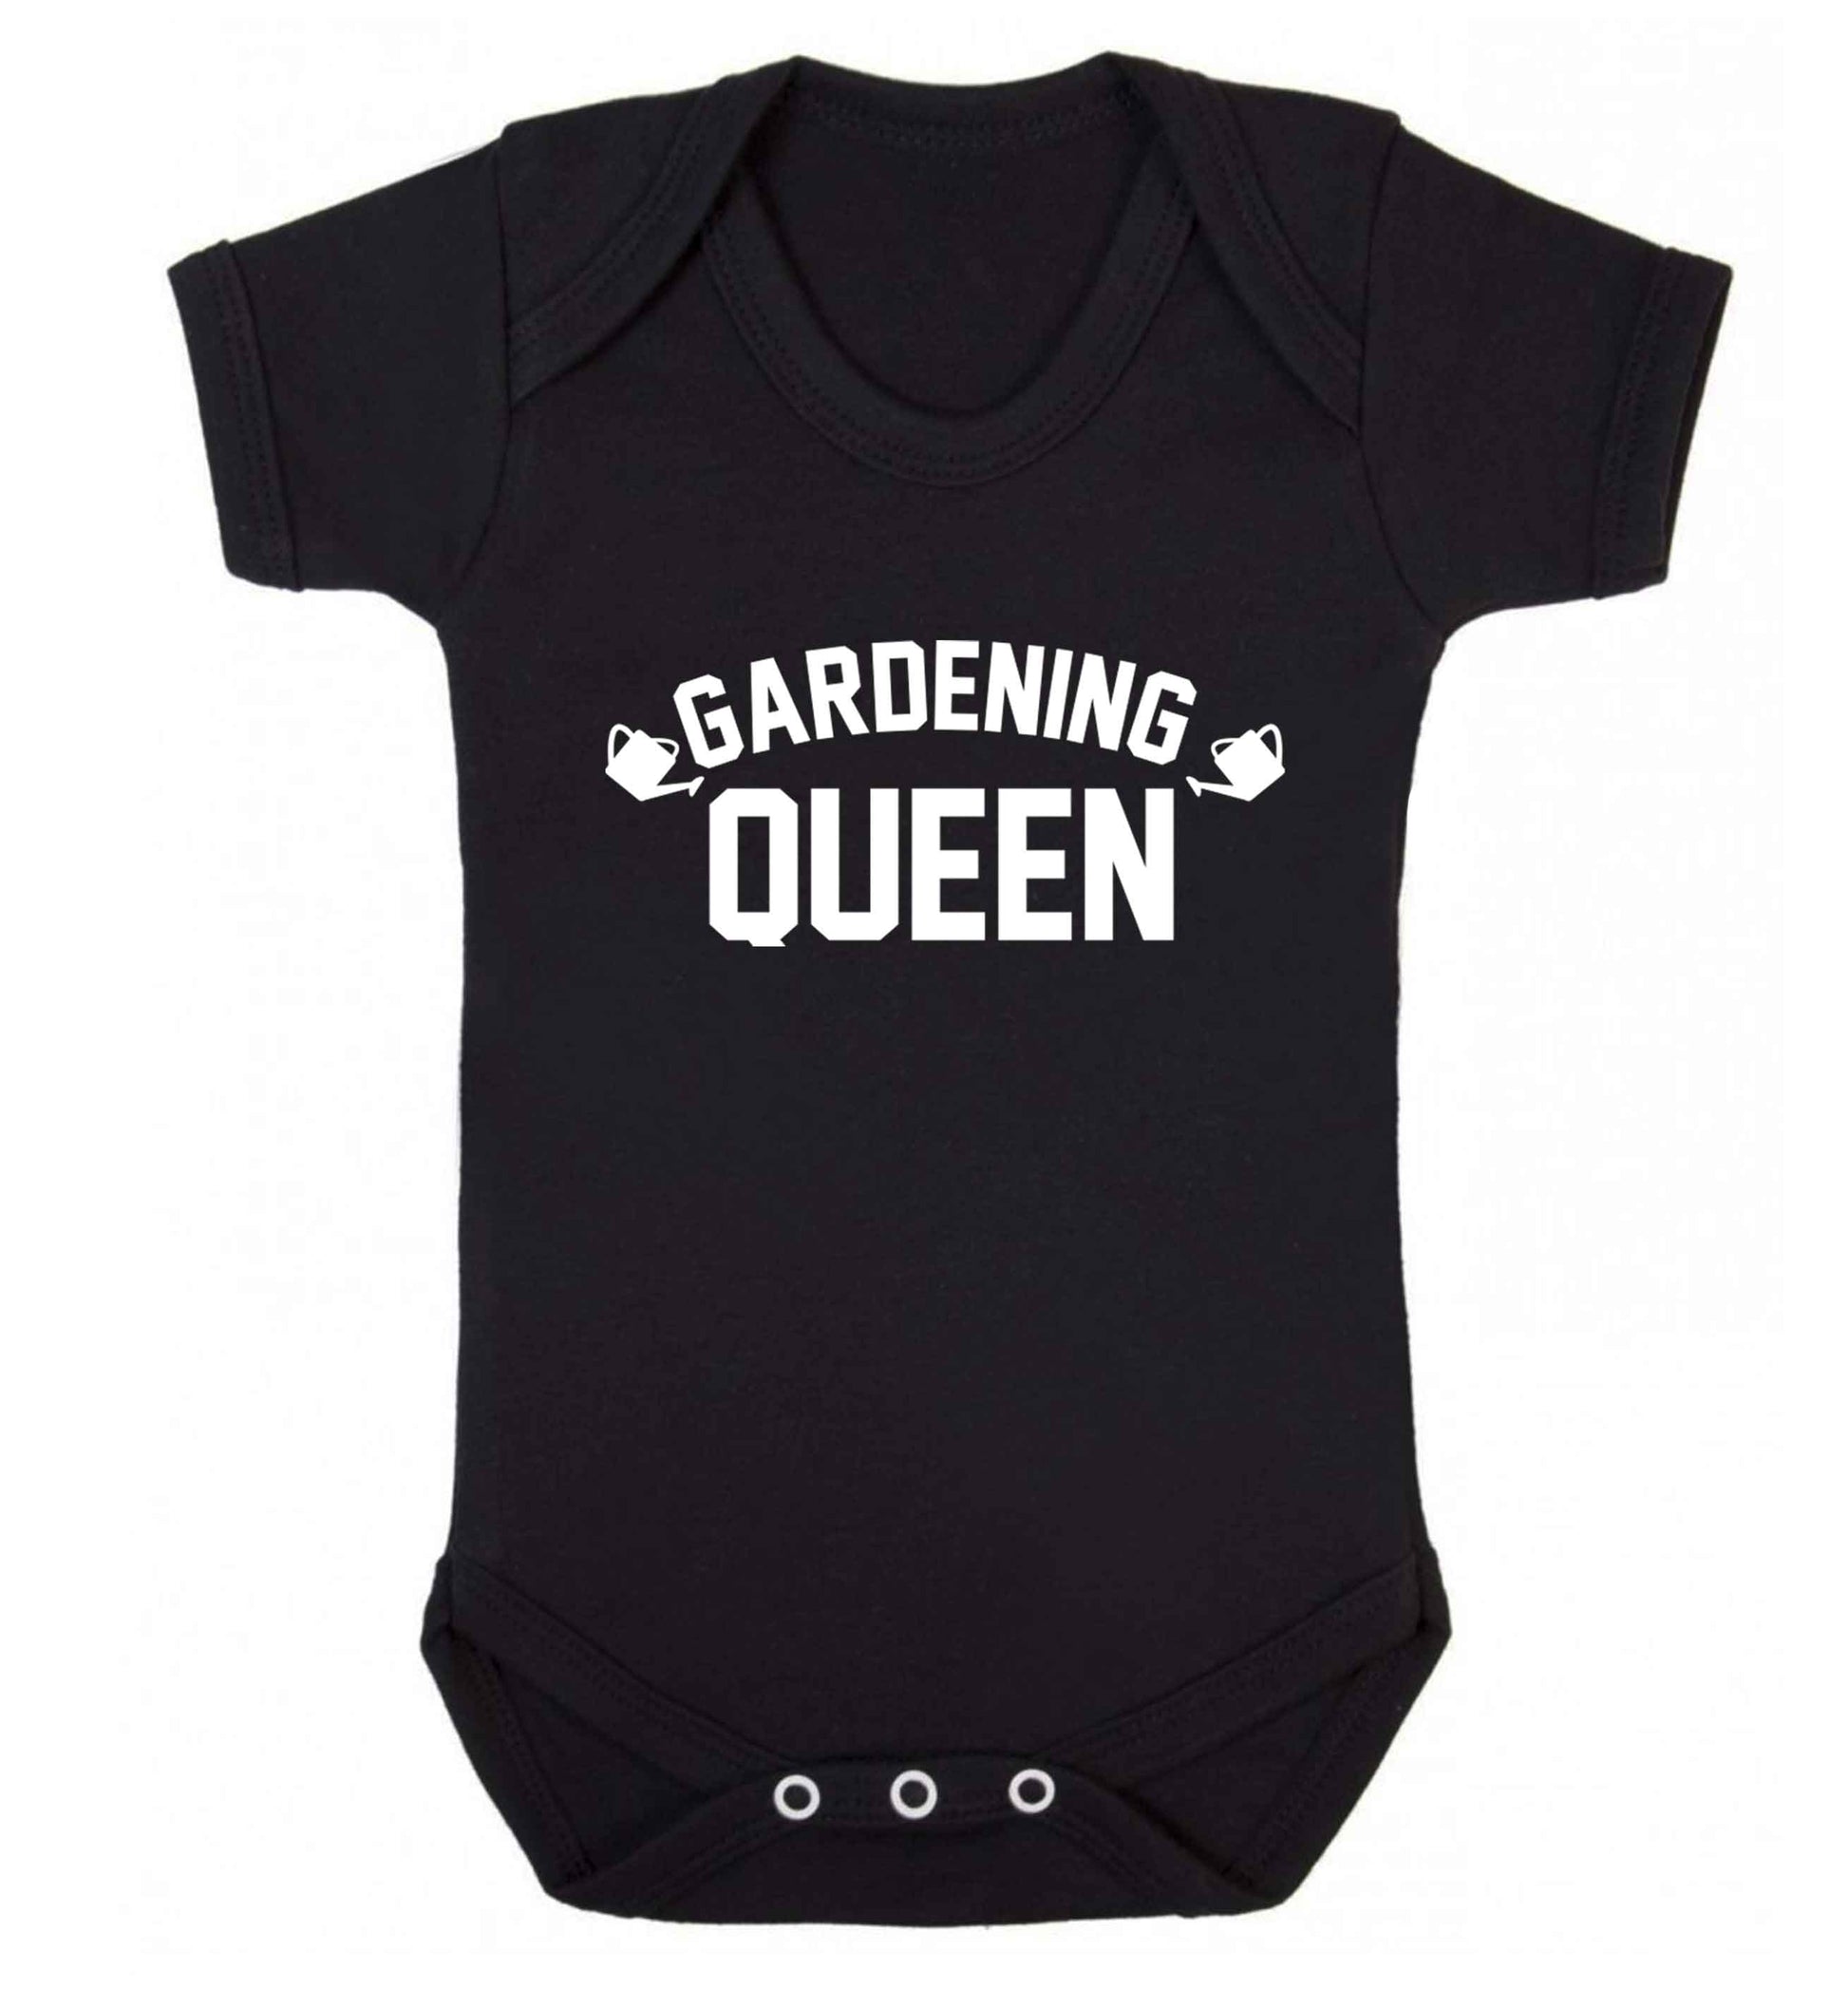 Gardening queen Baby Vest black 18-24 months